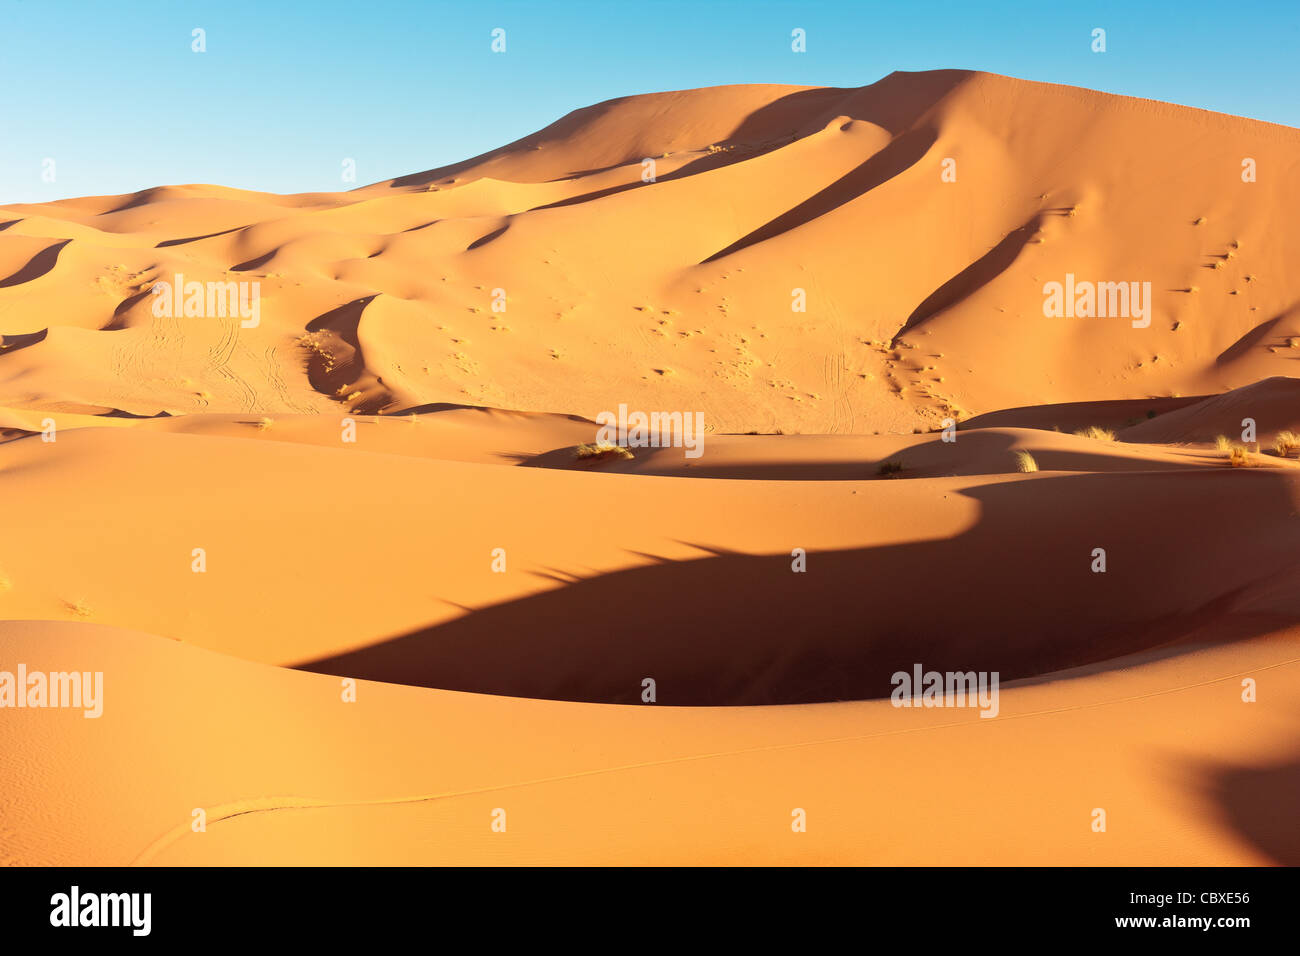 Sanddünen des Erg Chebbi in der Sahara Wüste, Marokko. Stockfoto